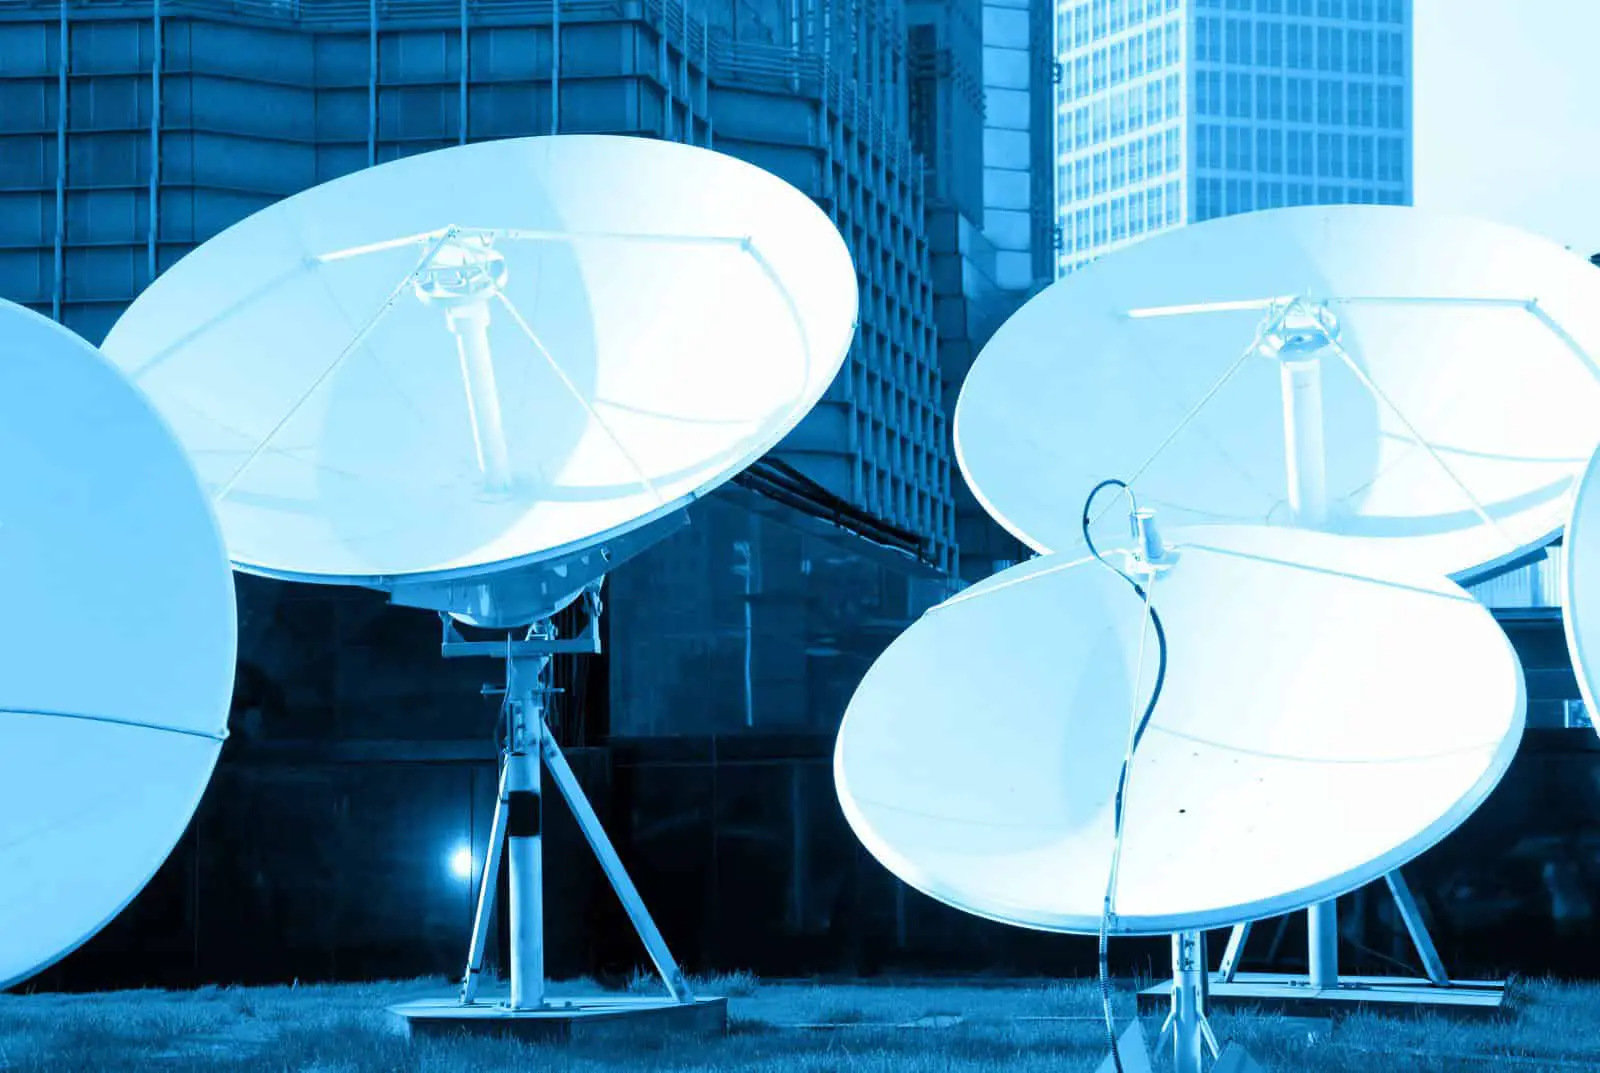 Satellite internet receivers